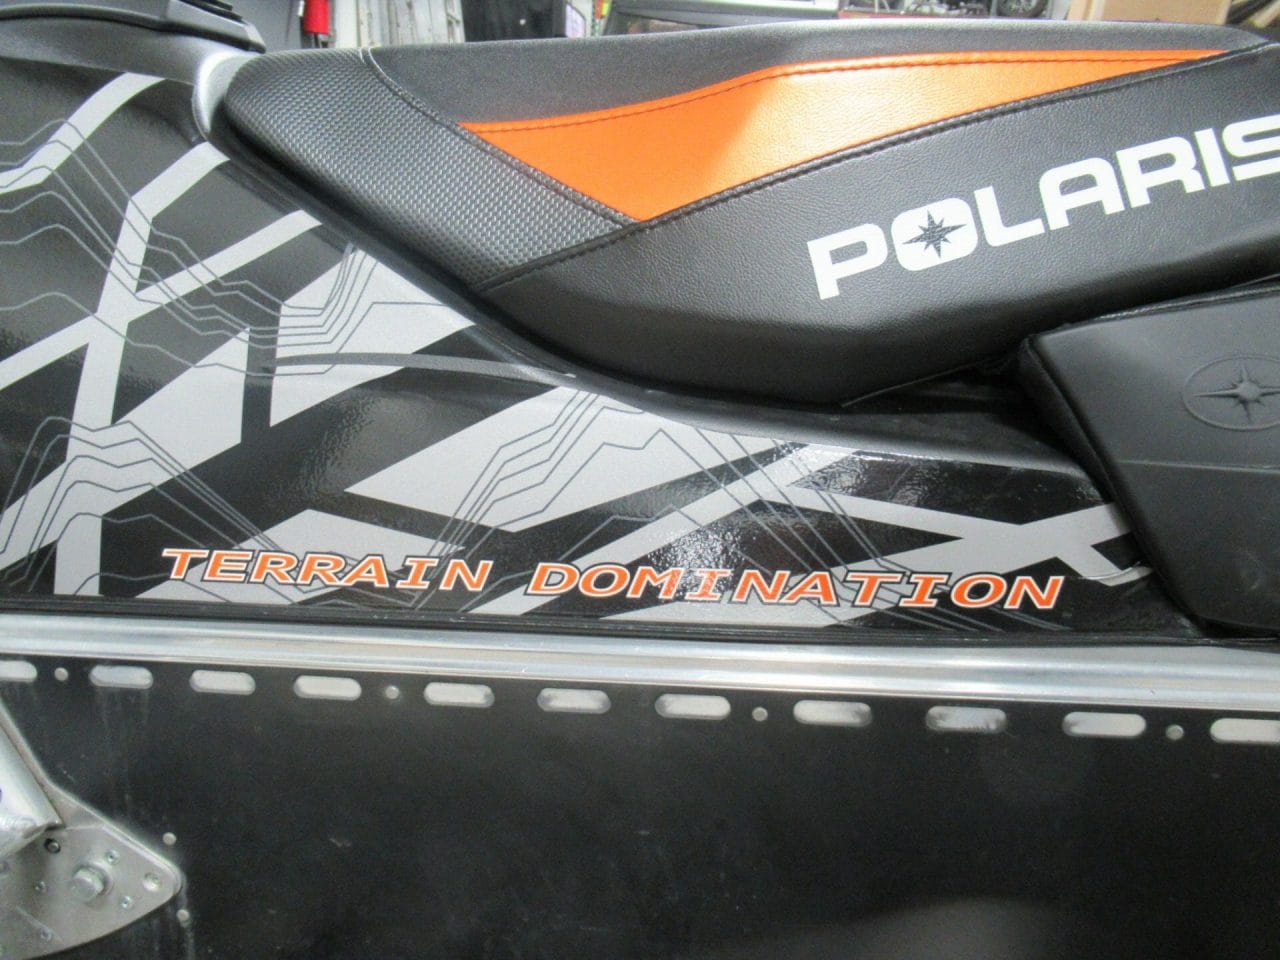 2015 Polaris Pro RmK 800 TD Turbo 163